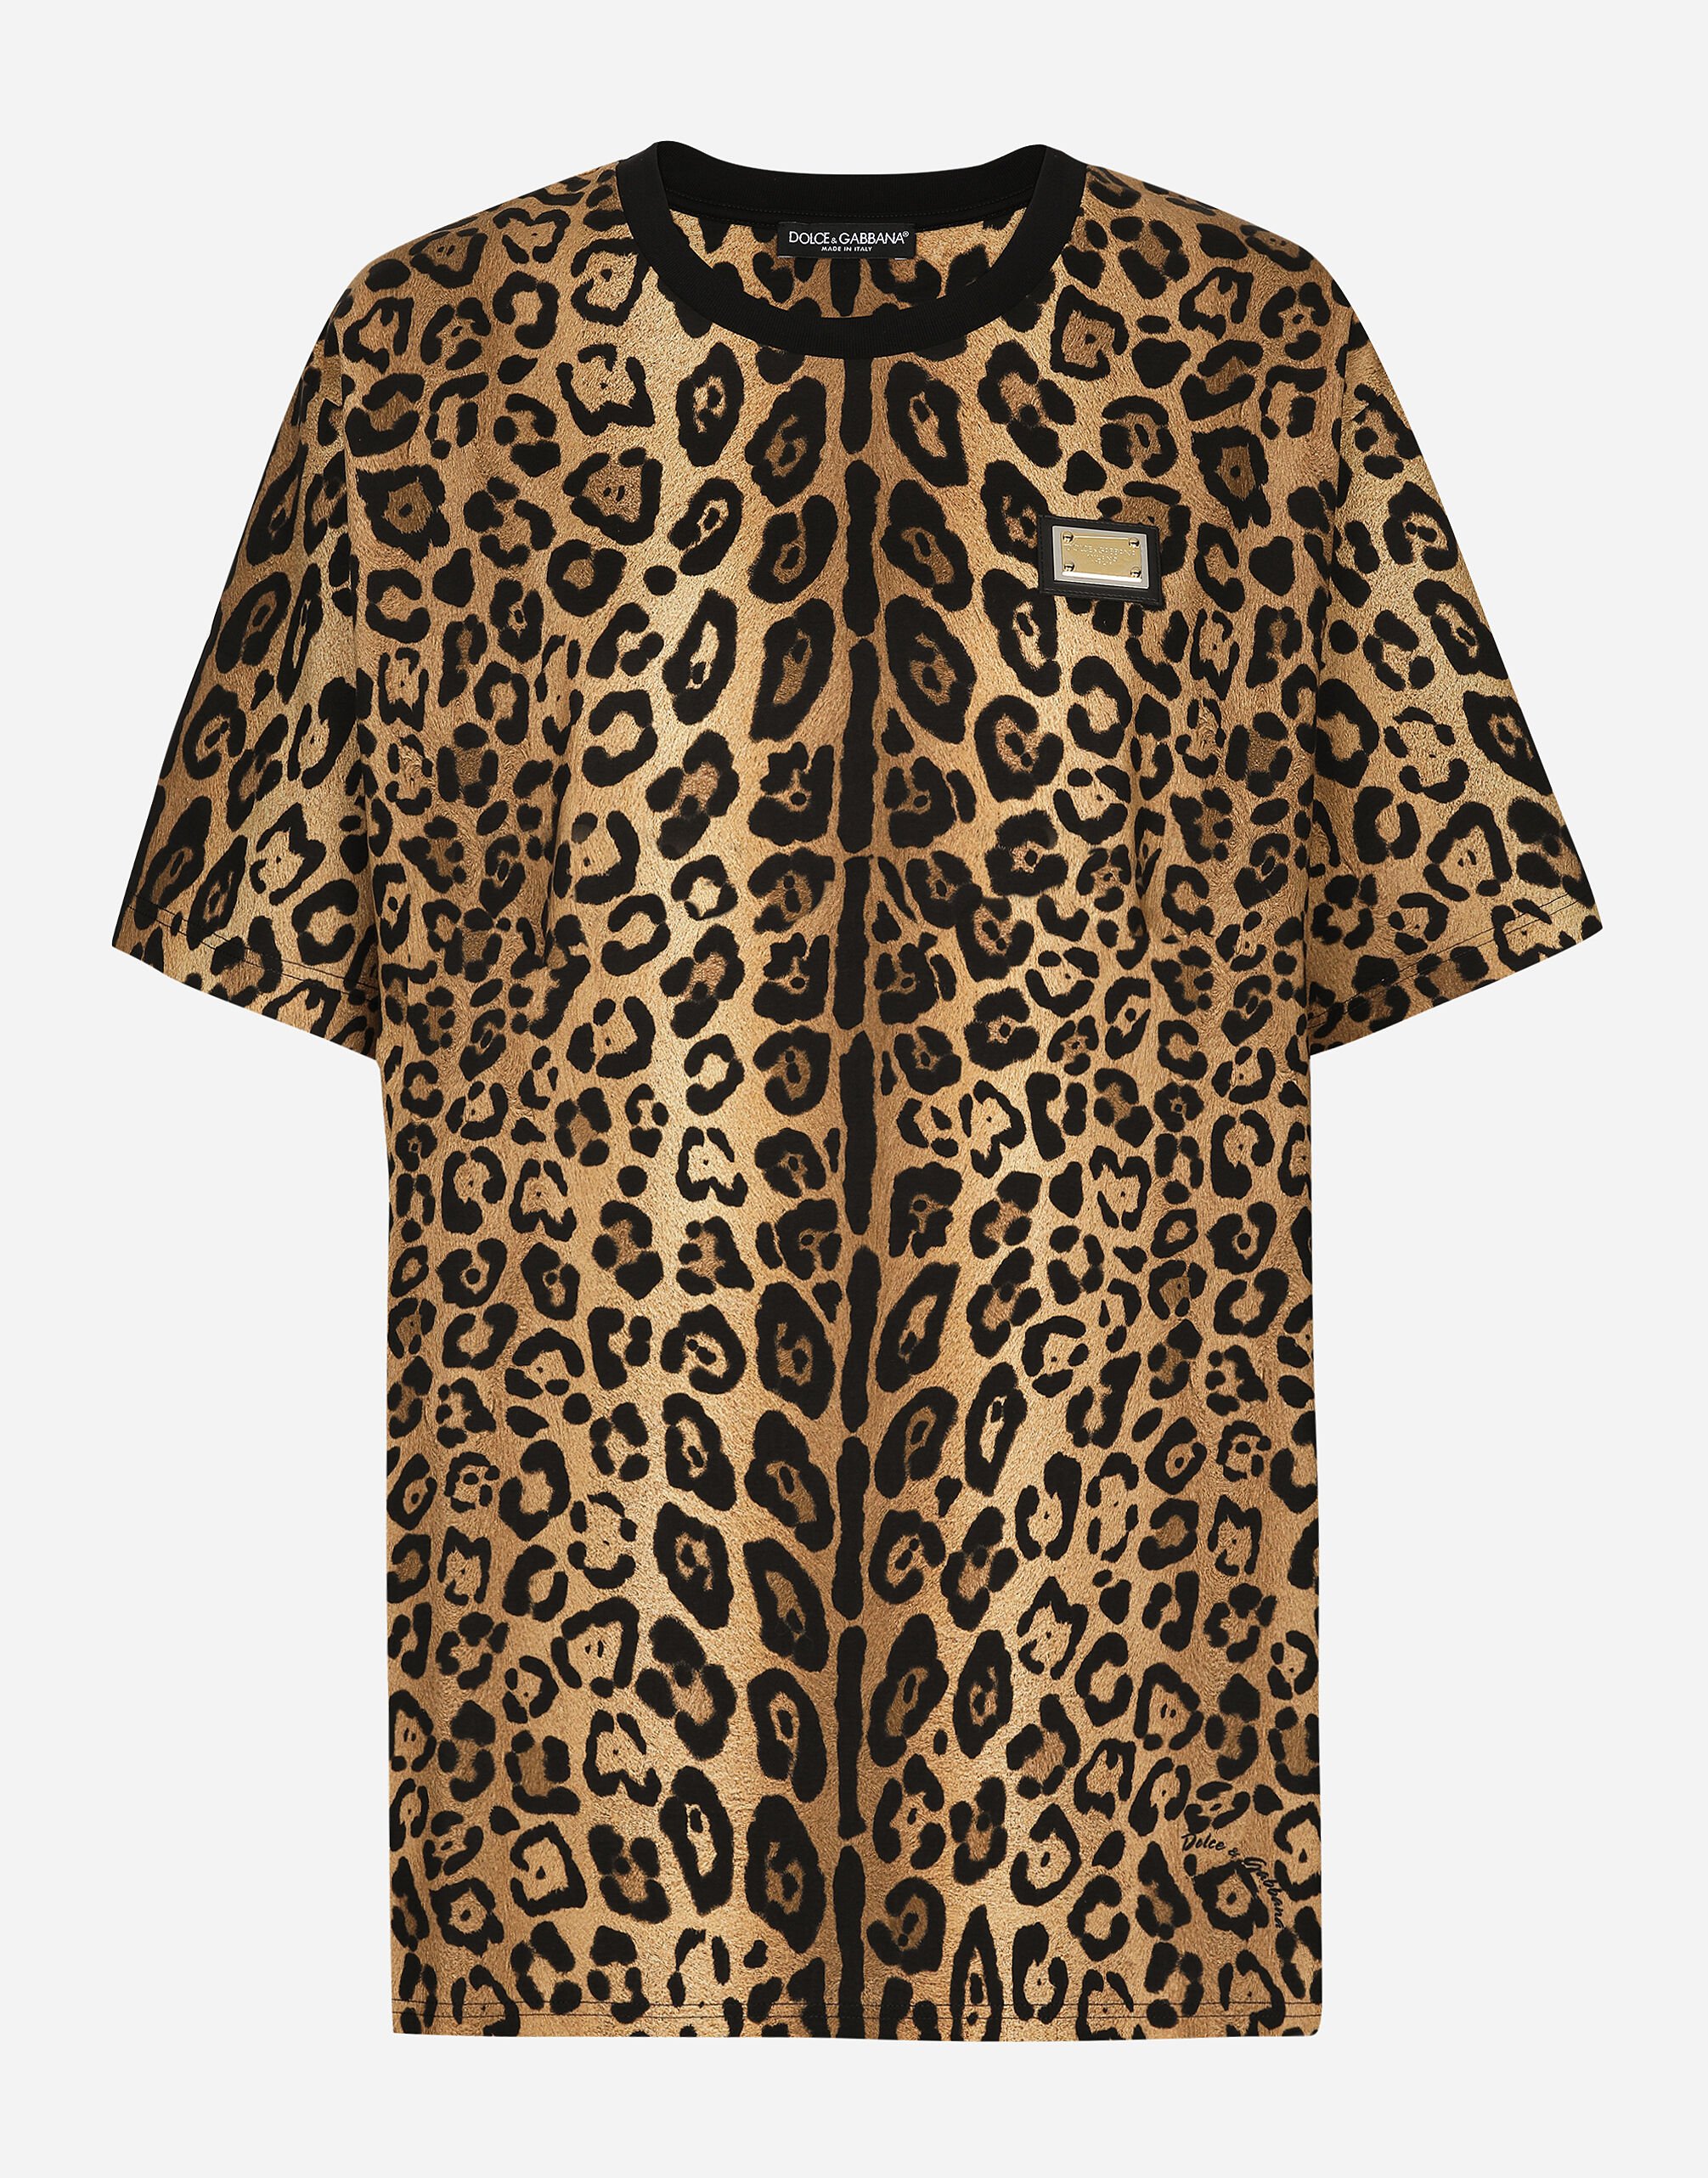 Mochila Dolce Gabbana Leopard Print - Paris Brechó